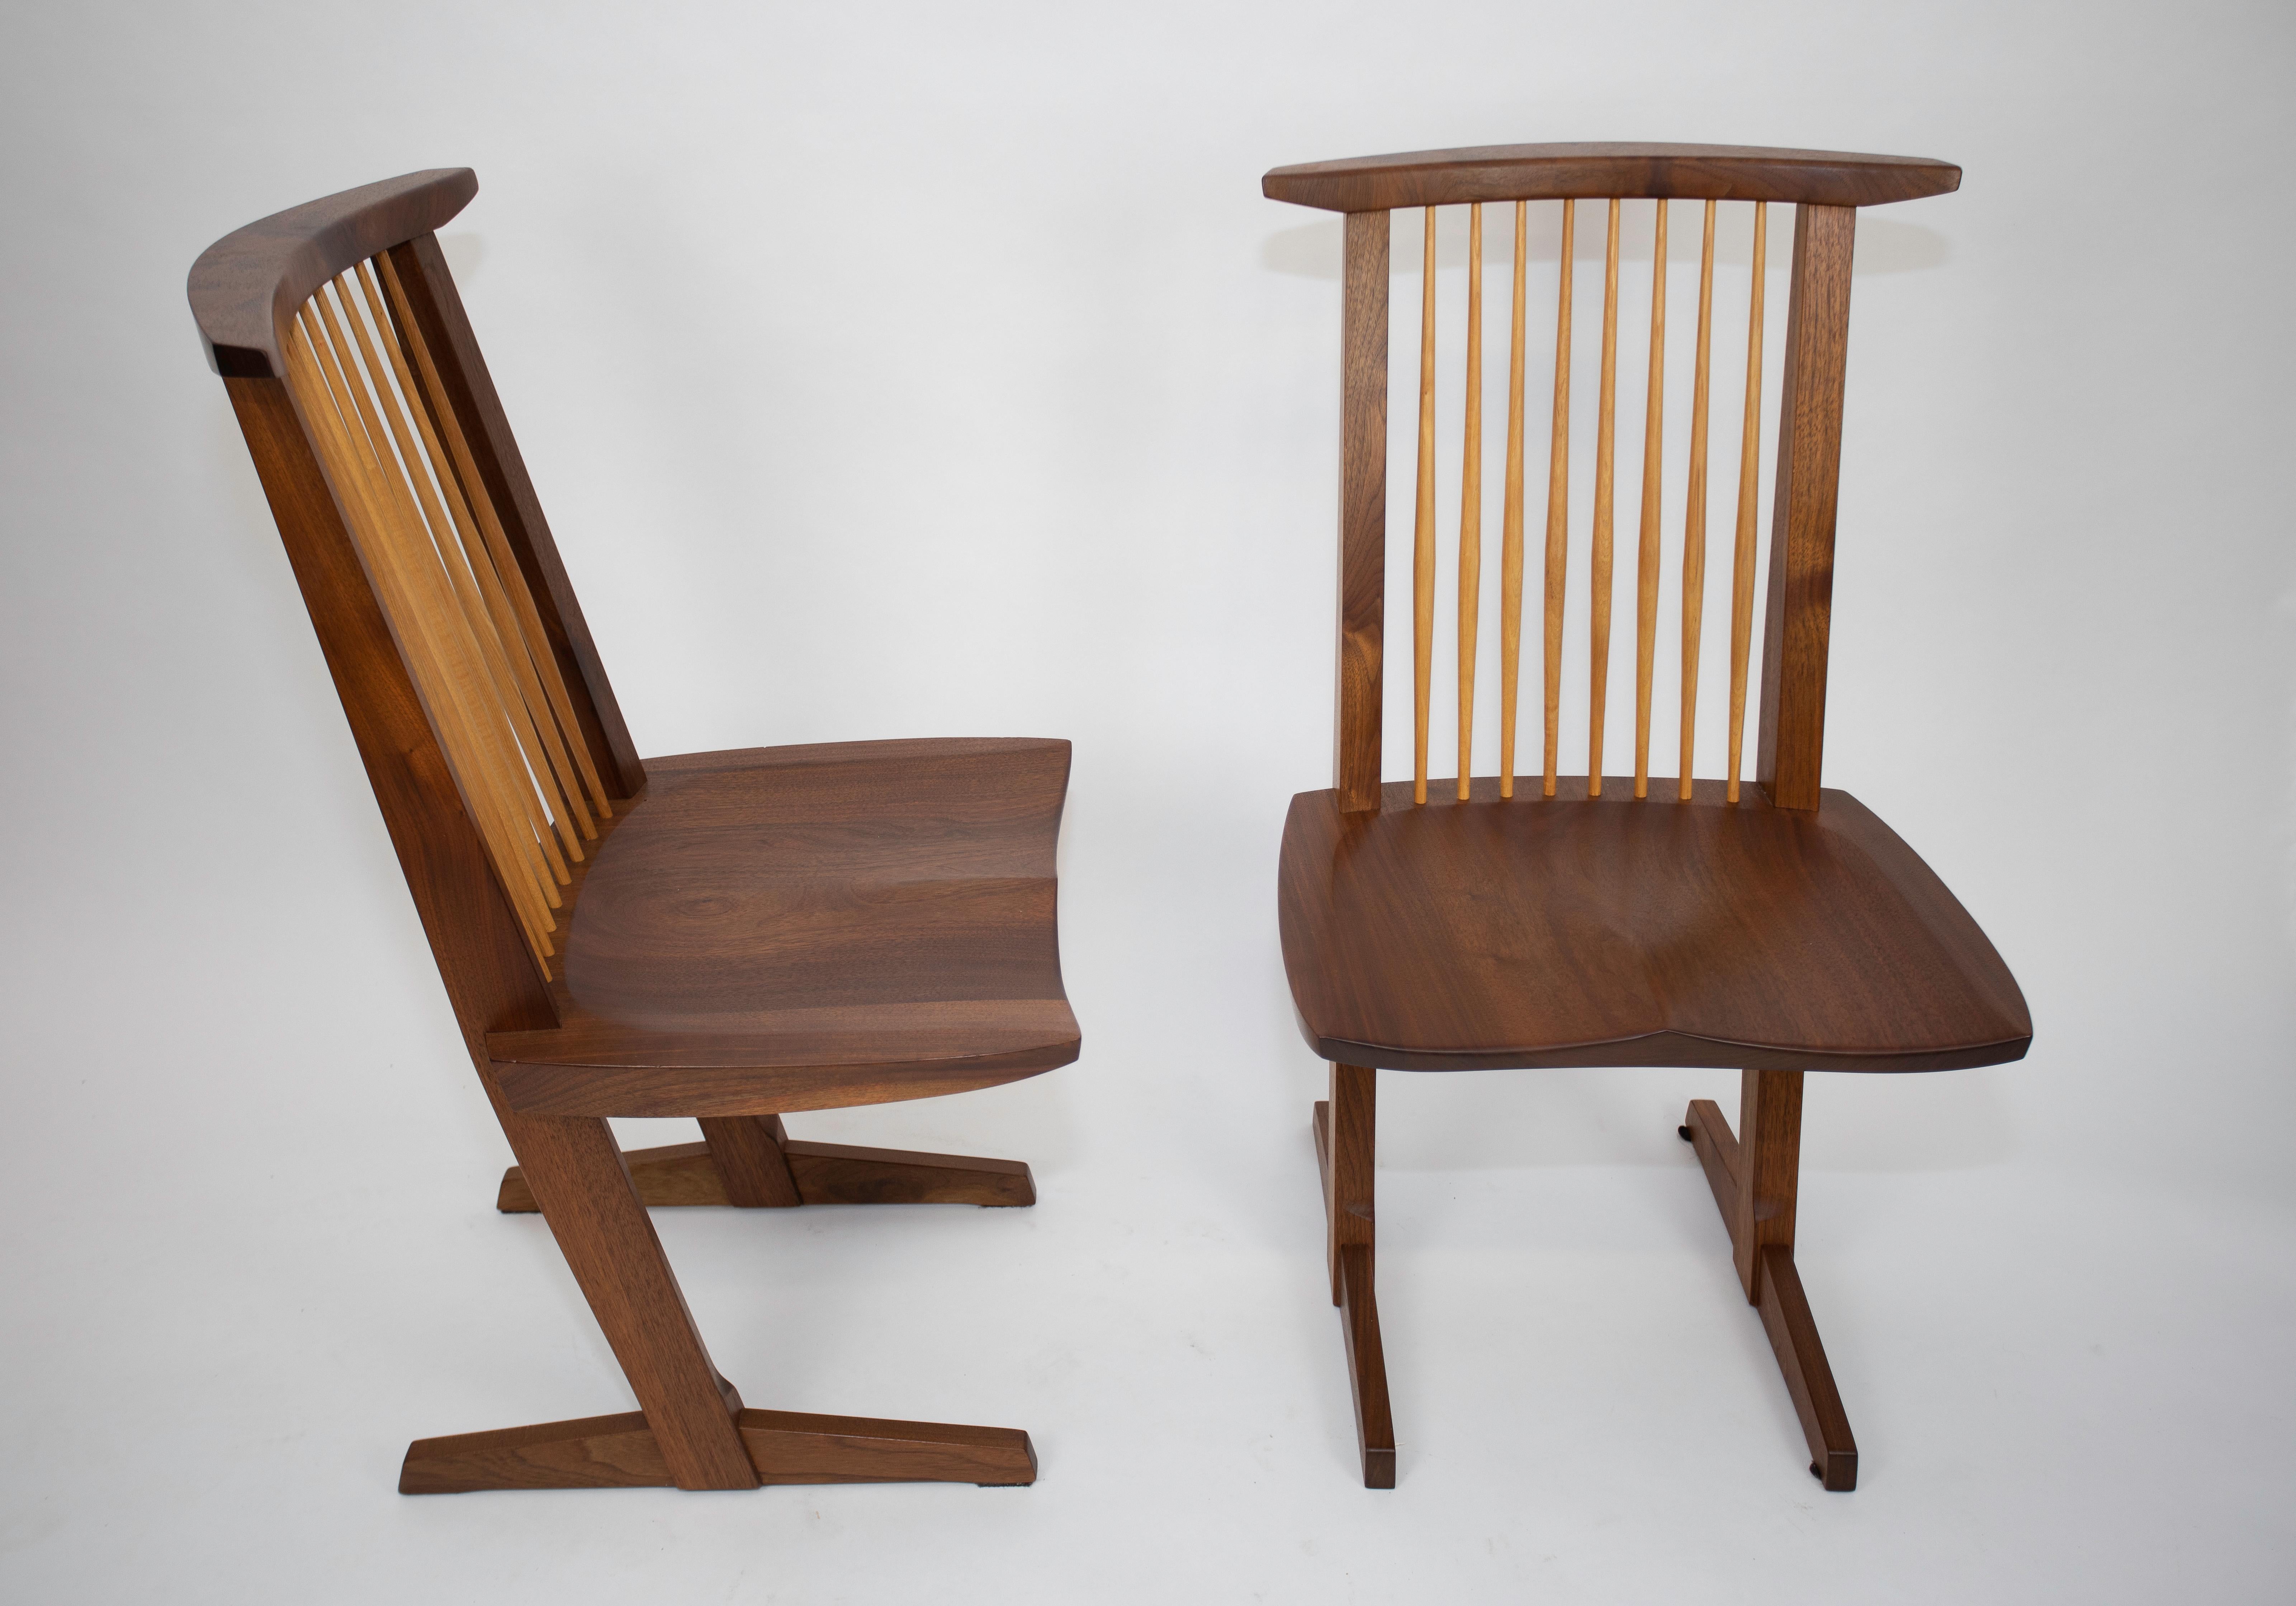 Nakashima Studio Conoid Chairs by Mira Nakashima
A matched pair produced in 2000.
clean original surface
